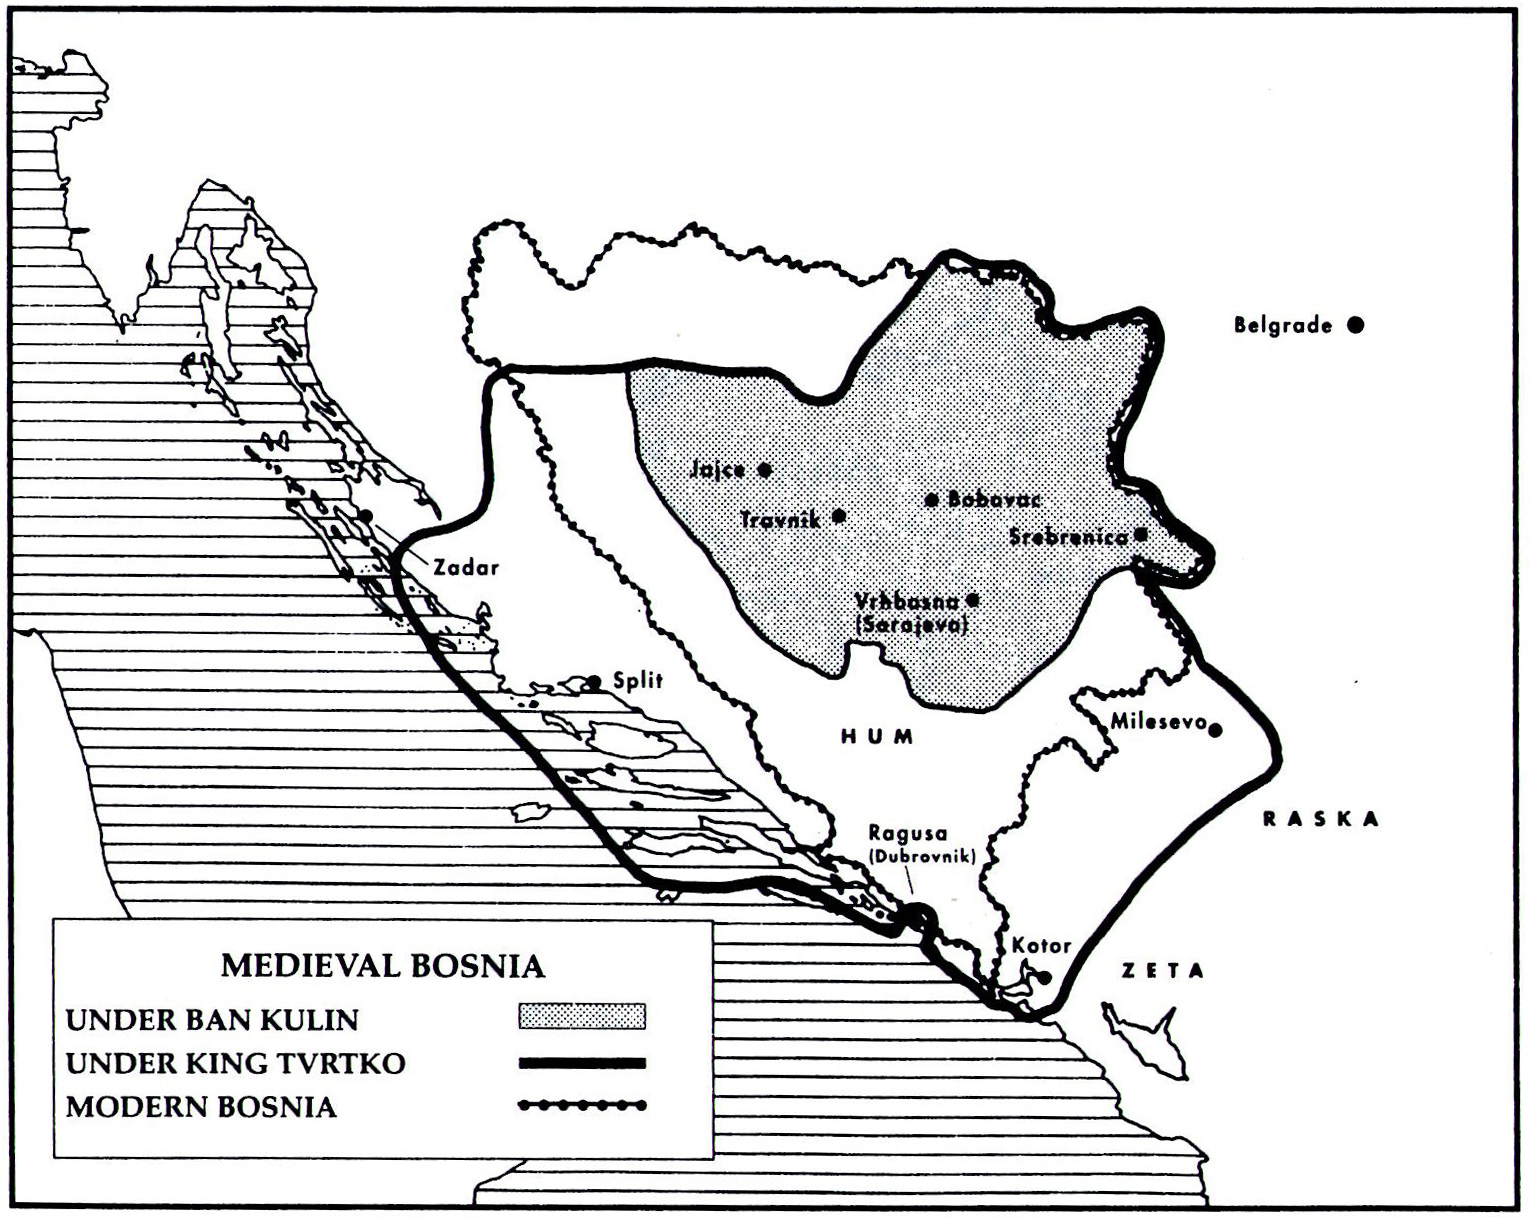 The History of Bosnia